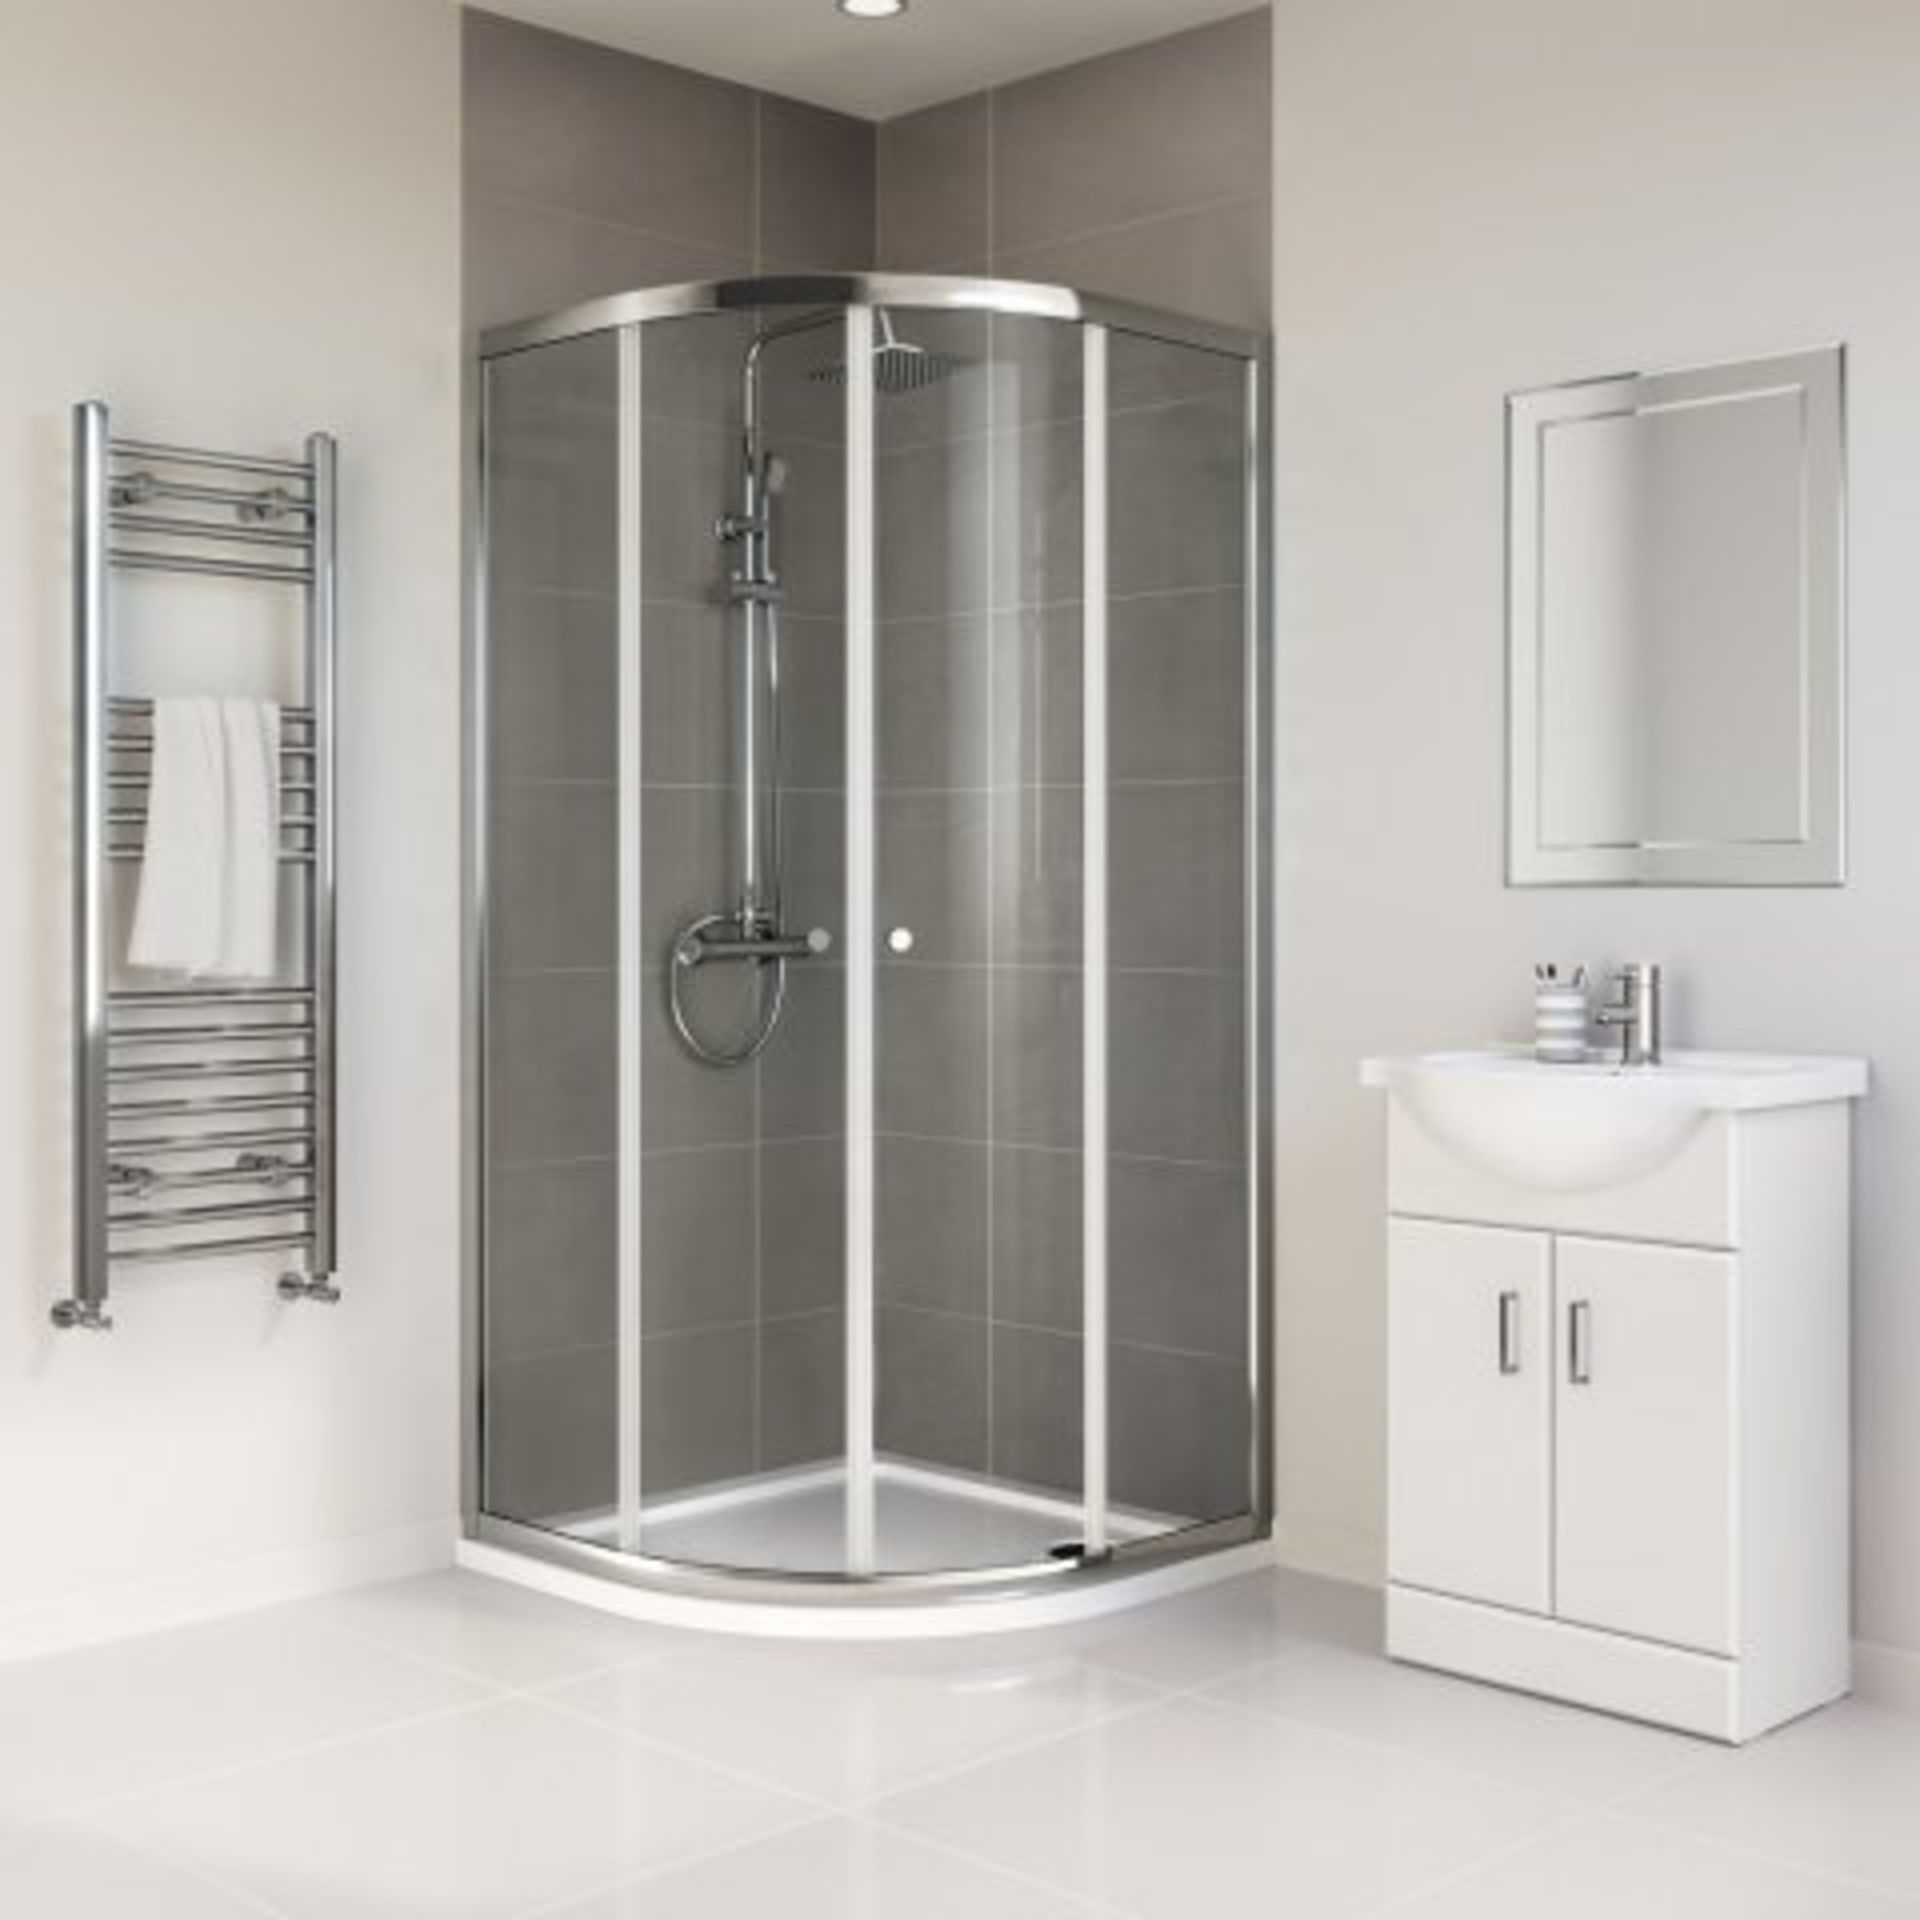 (J177) 800x800mm - Elements Quadrant Shower Enclosure. RRP £199.99. Budget Solution Our entry - Image 3 of 5